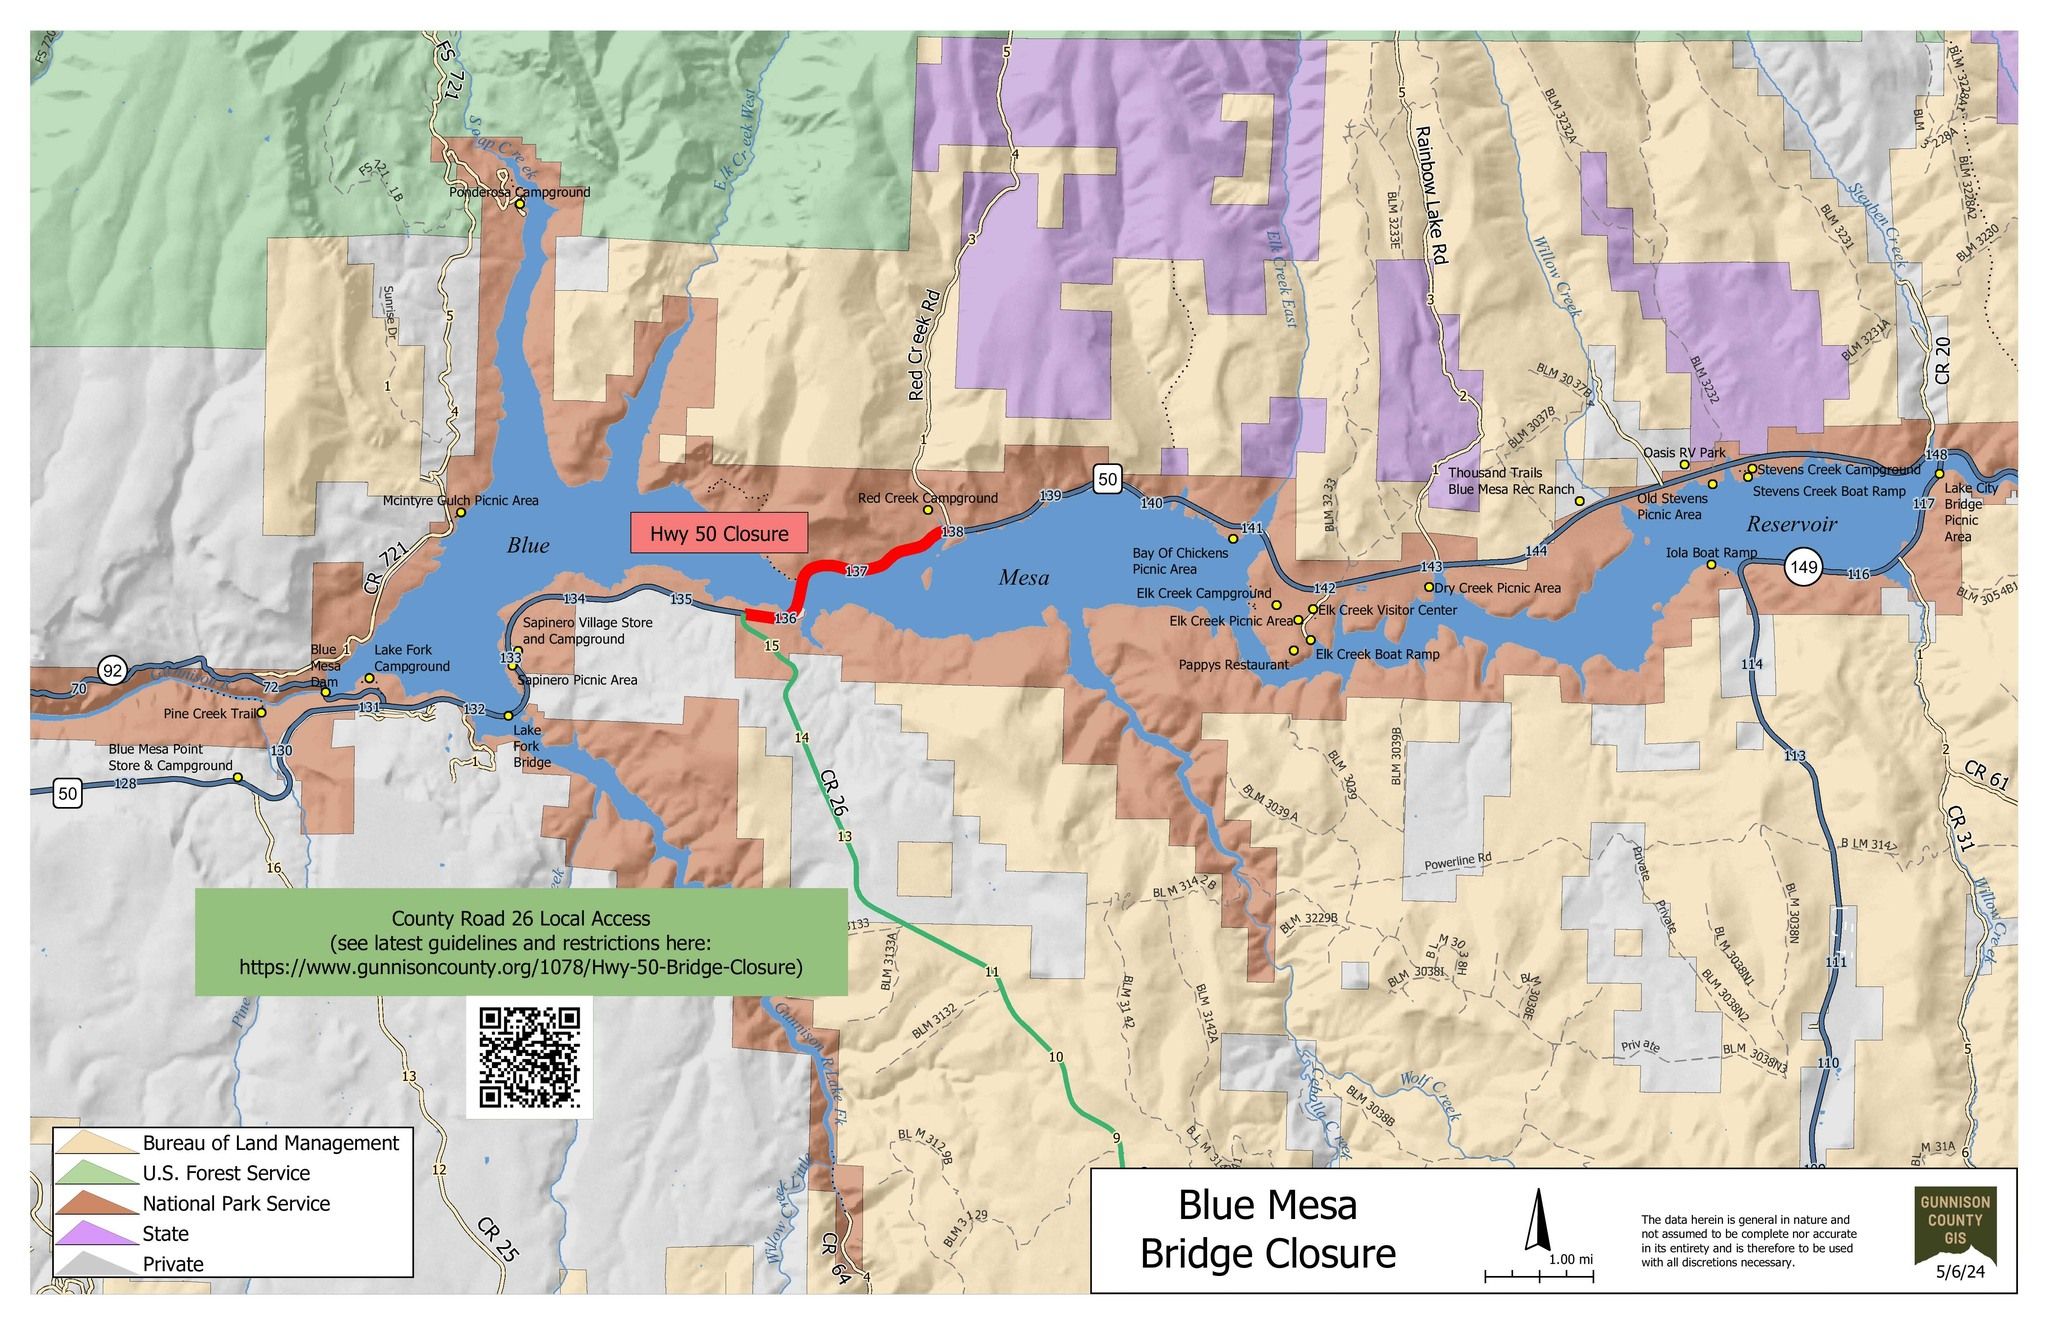 Map of Blue Mesa Reservoir and the U.S. 50 bridge closure